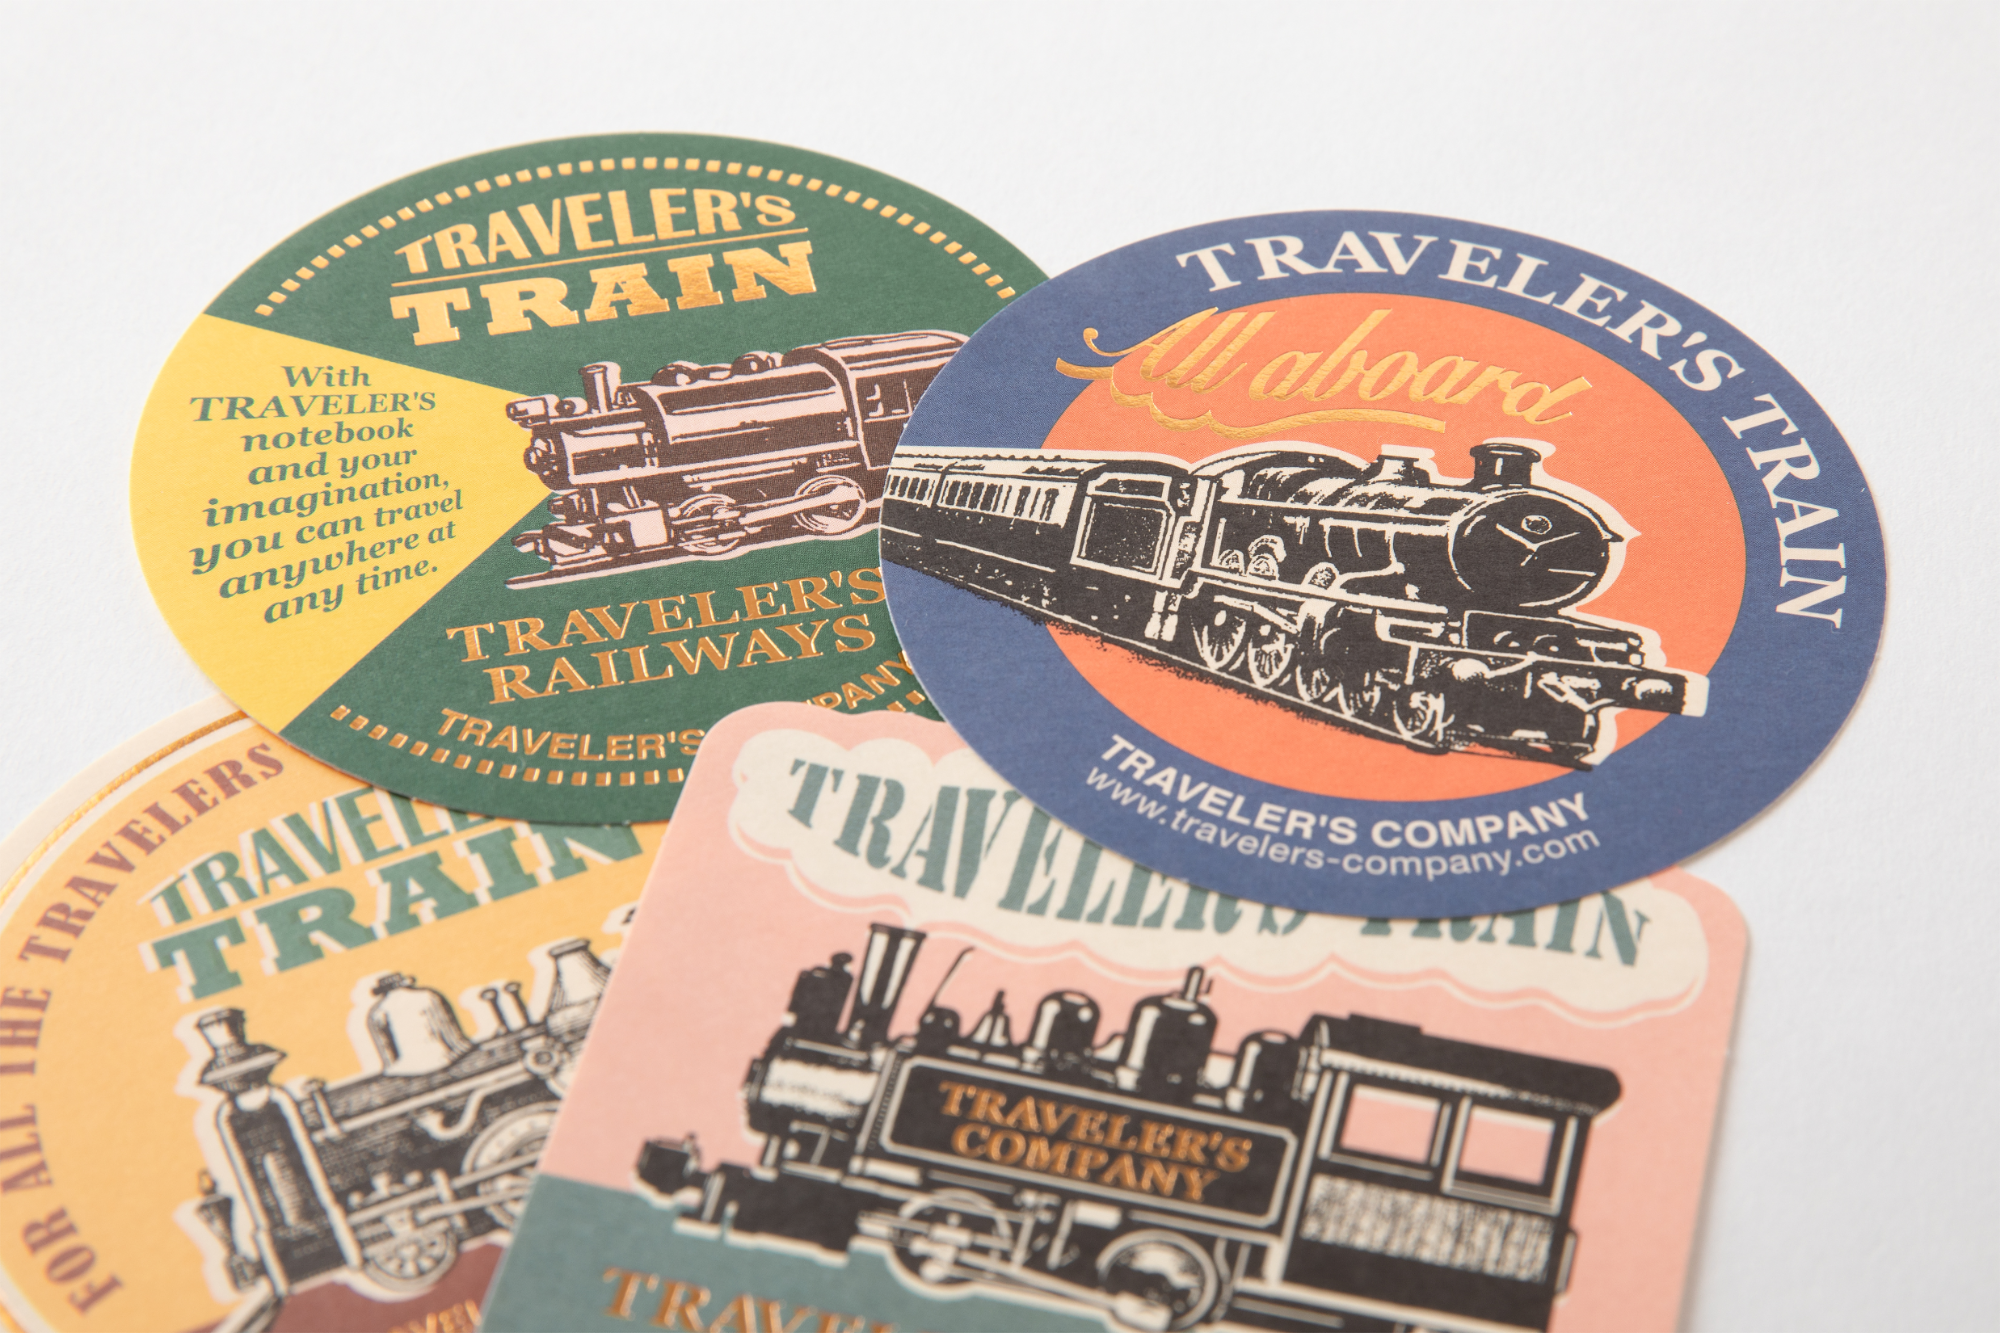 Traveler’s Company Traveler's notebook – Passport Size Limited Set Train